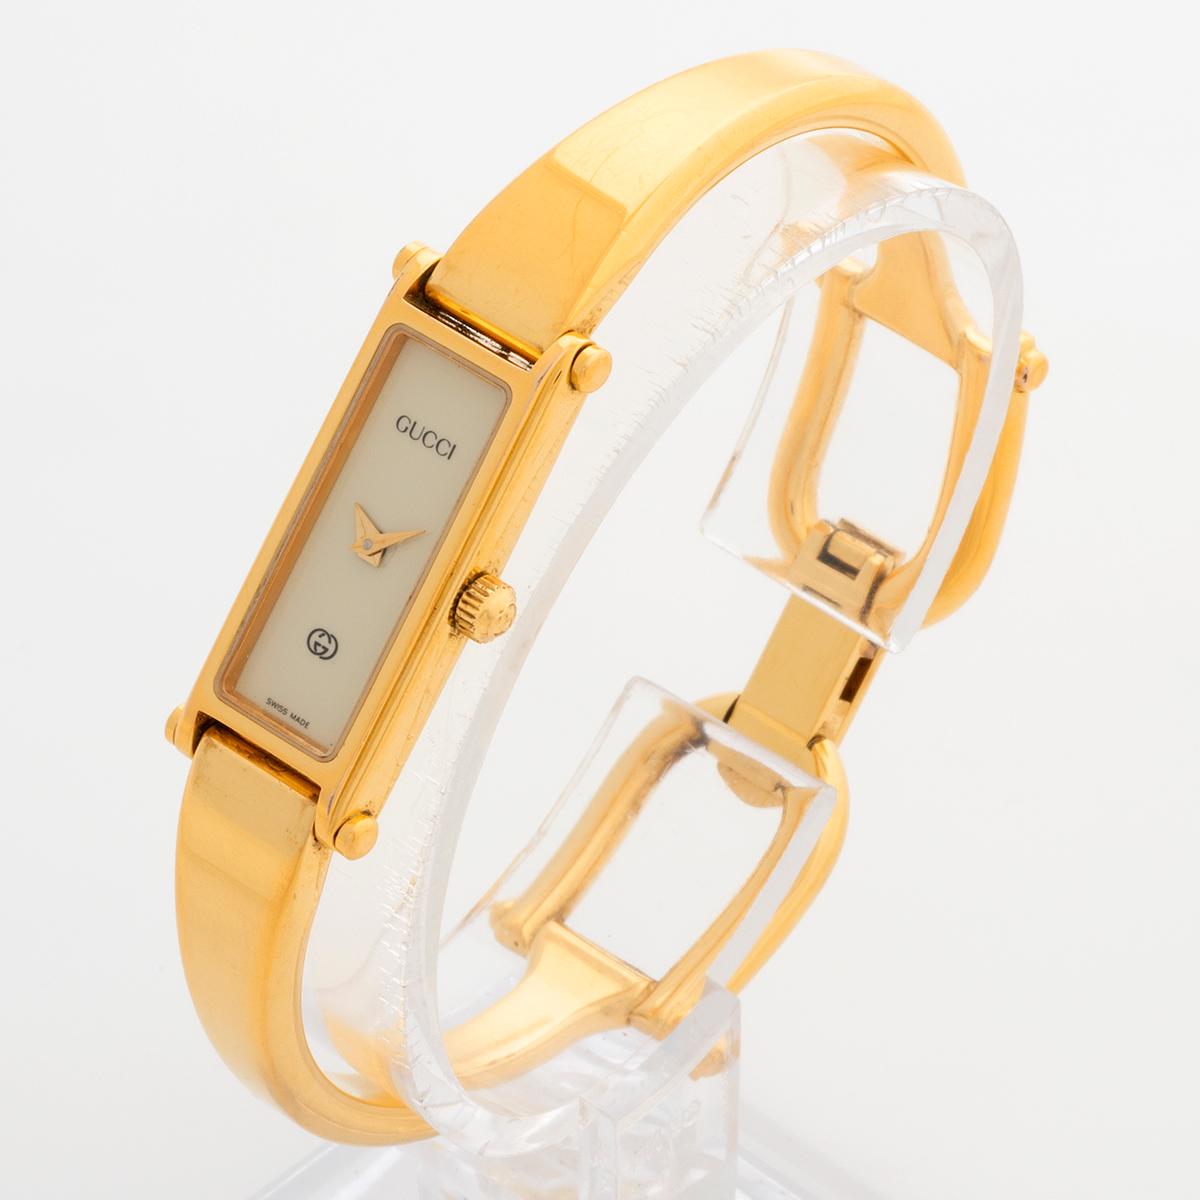 gucci 1500l watch gold price